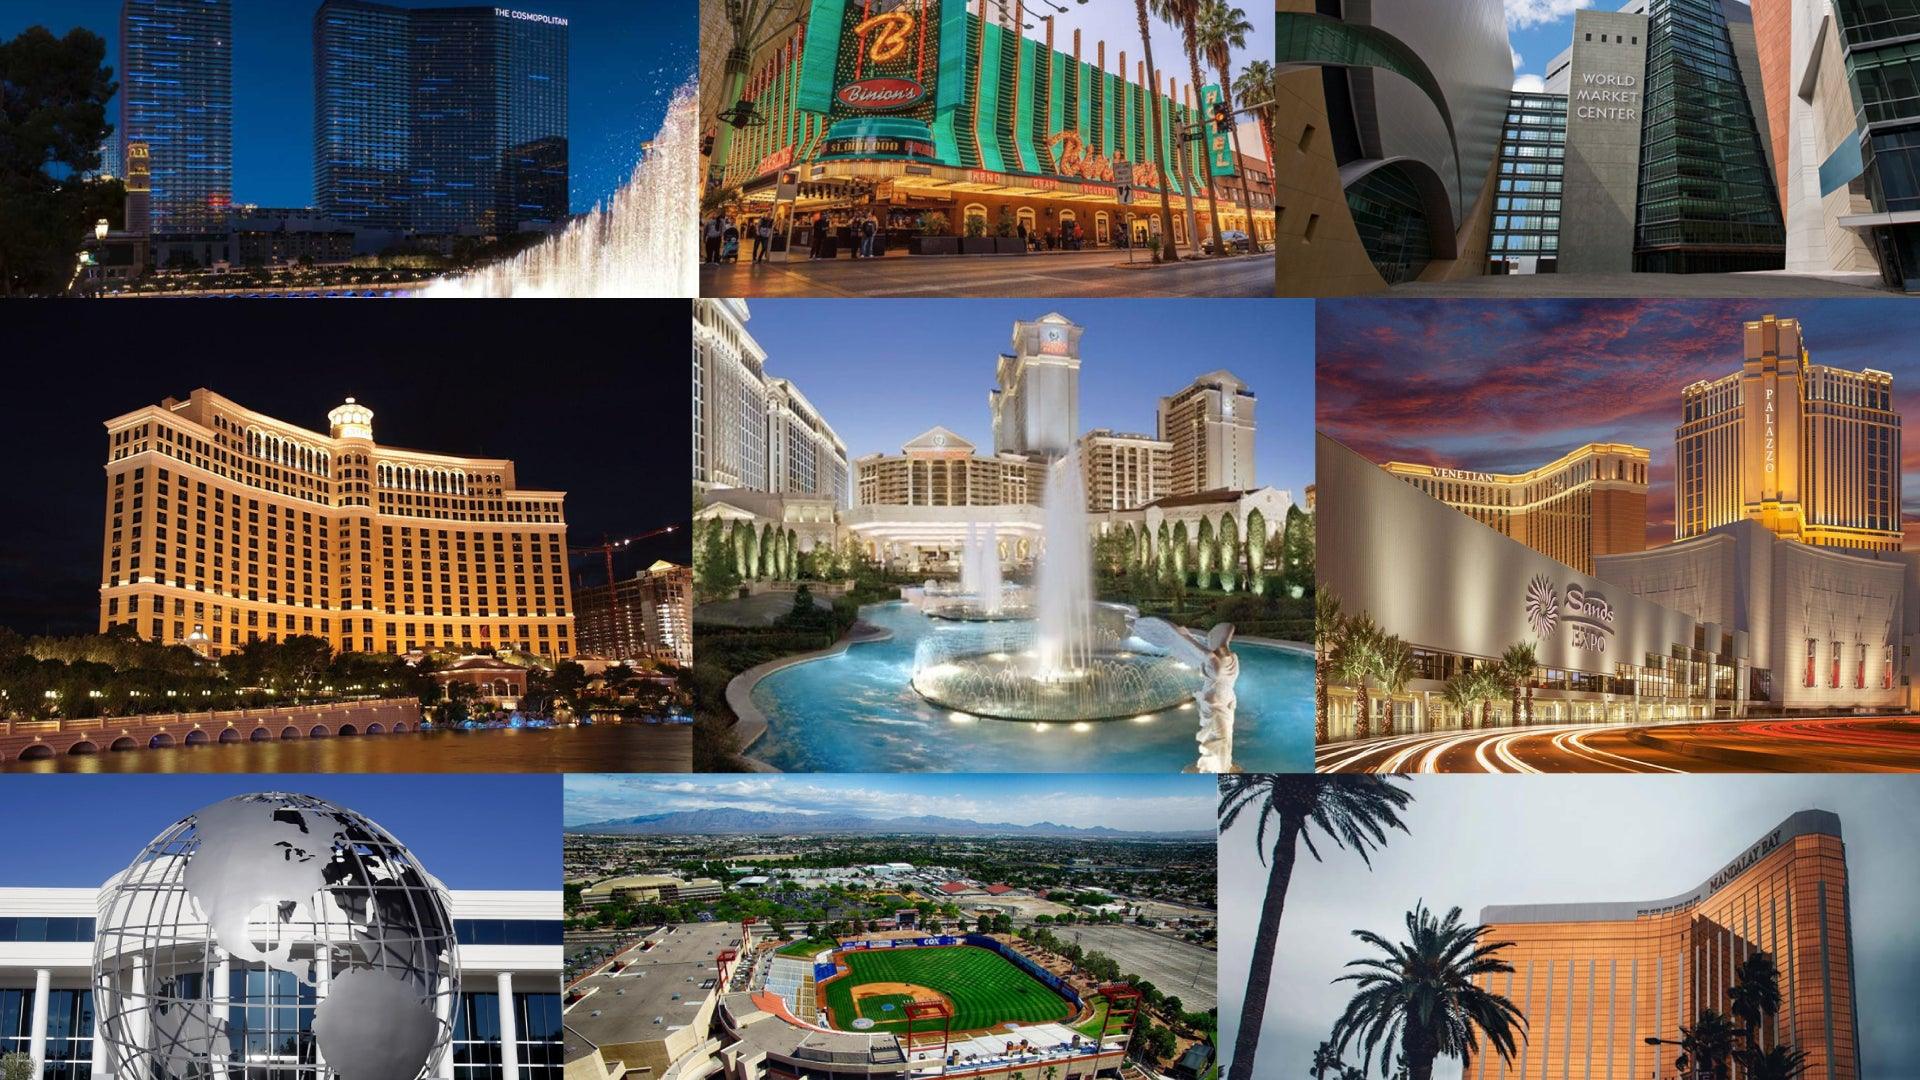 Horseshoe Las Vegas - Las Vegas, NV Meeting Rooms & Event Space